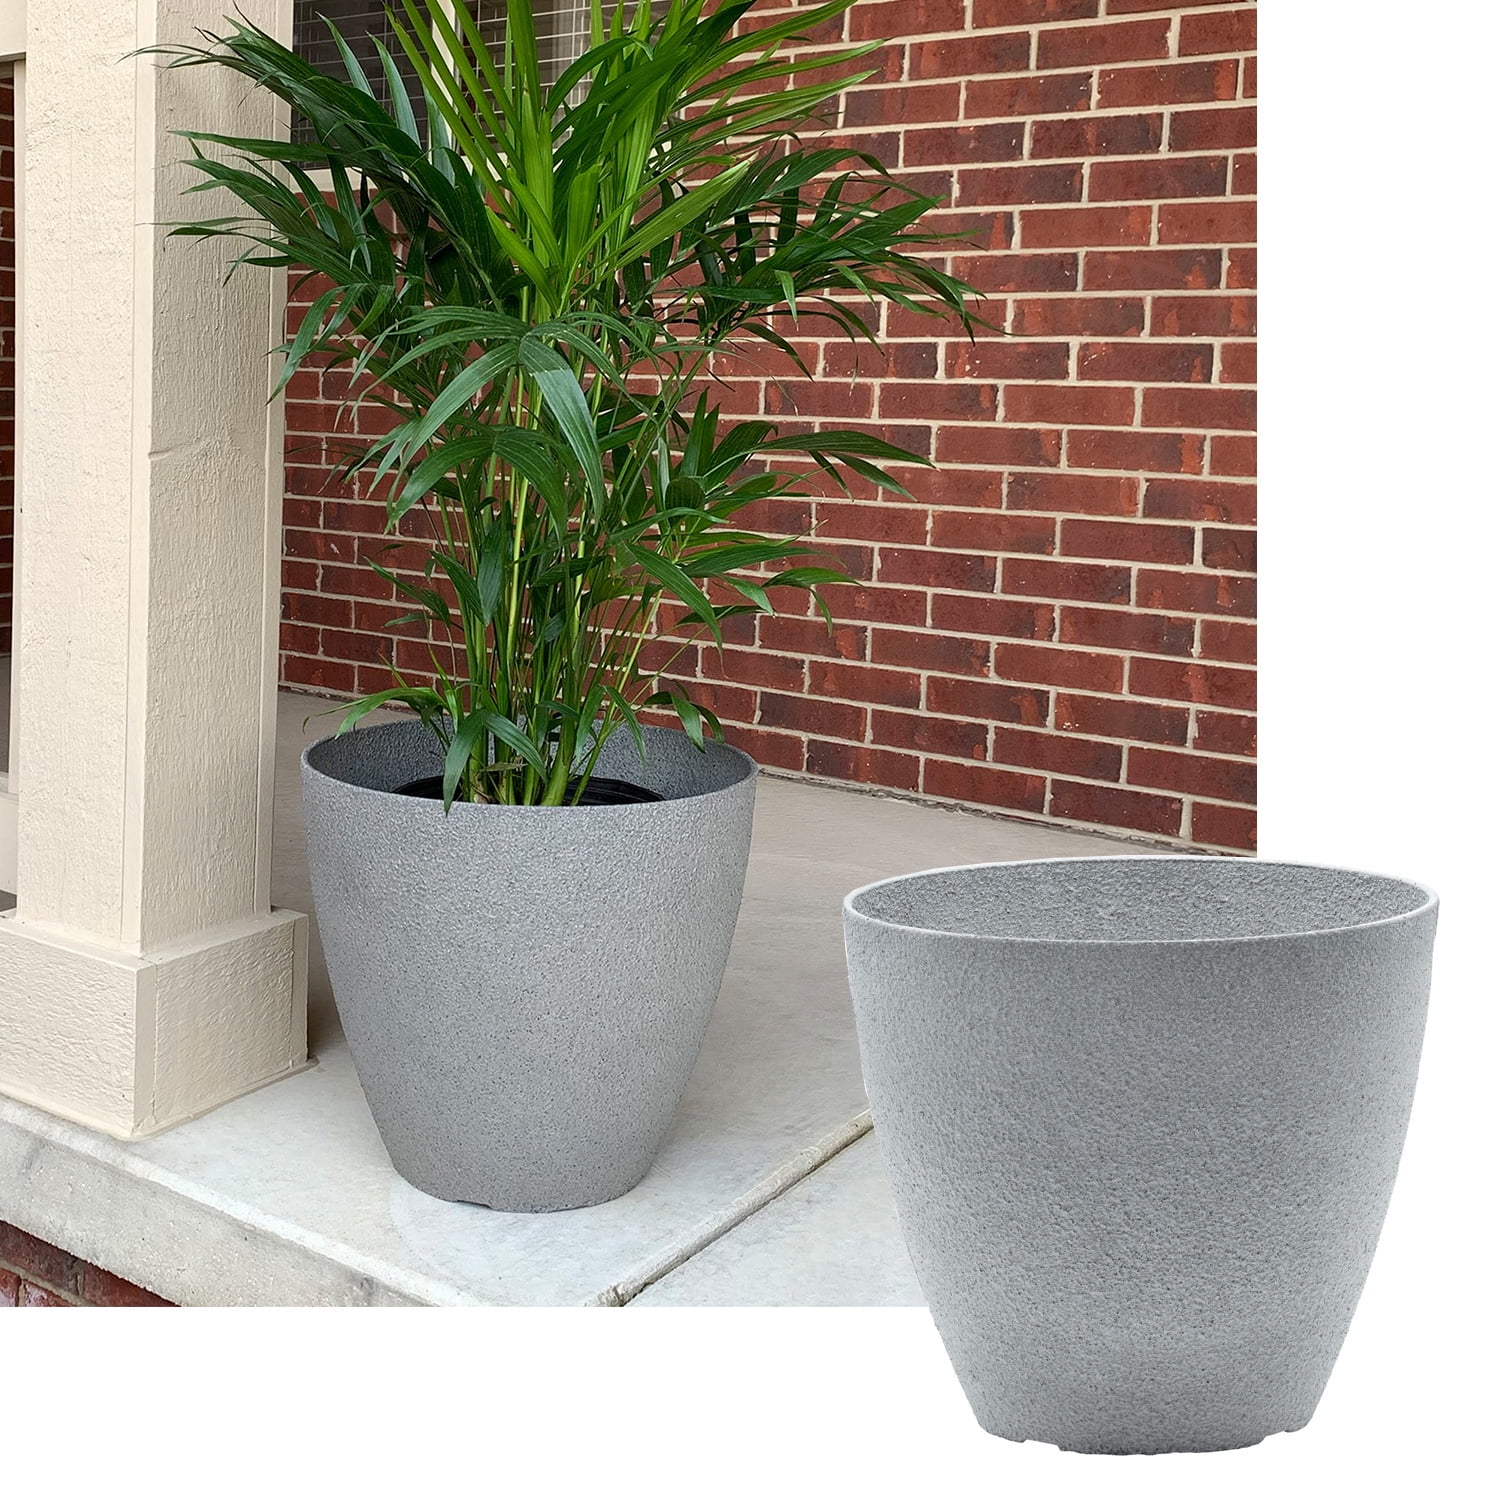 Large Round Patterned Grey Metal Bucket Planter Plant Flower Pot Garden PC 